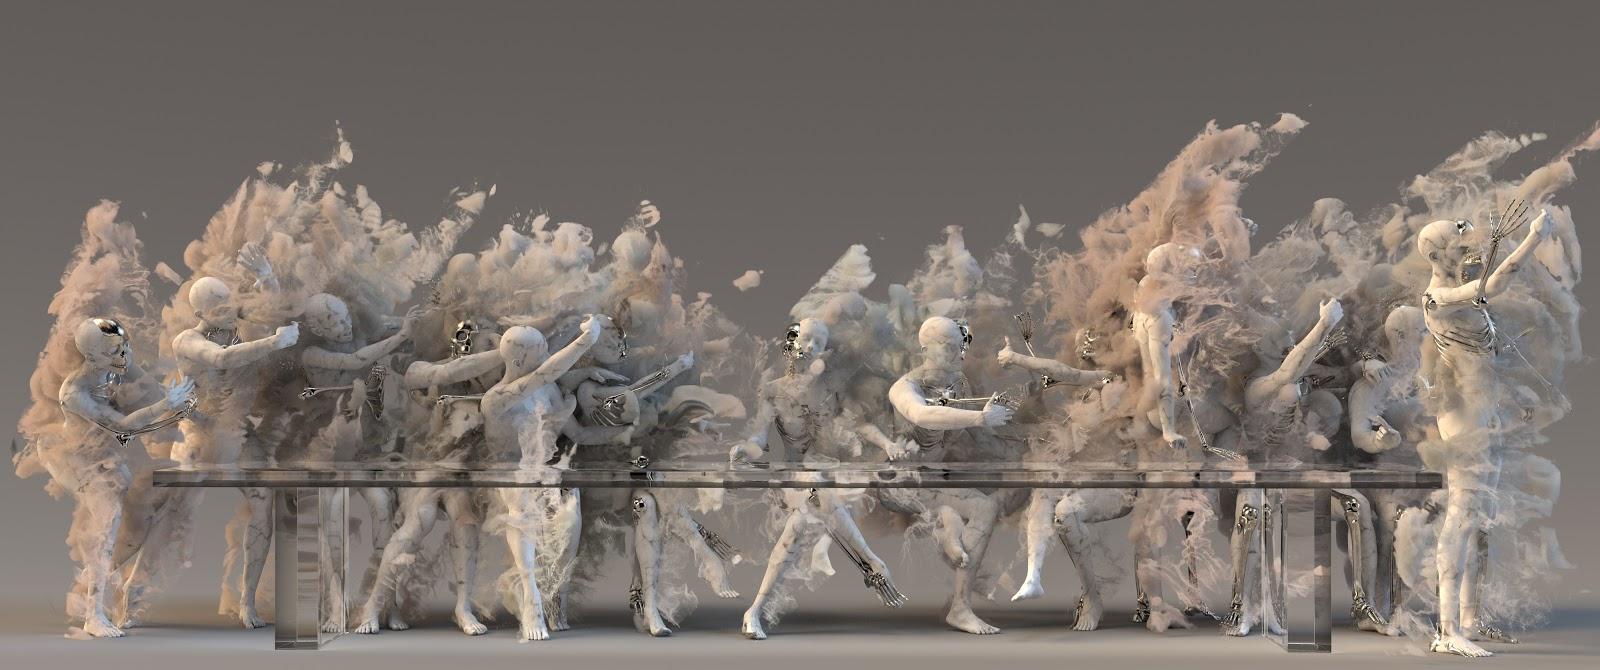 Impossible sculptures no.1, oeuvre du duo d'artistes numériques ha:ar. [ha:ar - SuperRare]